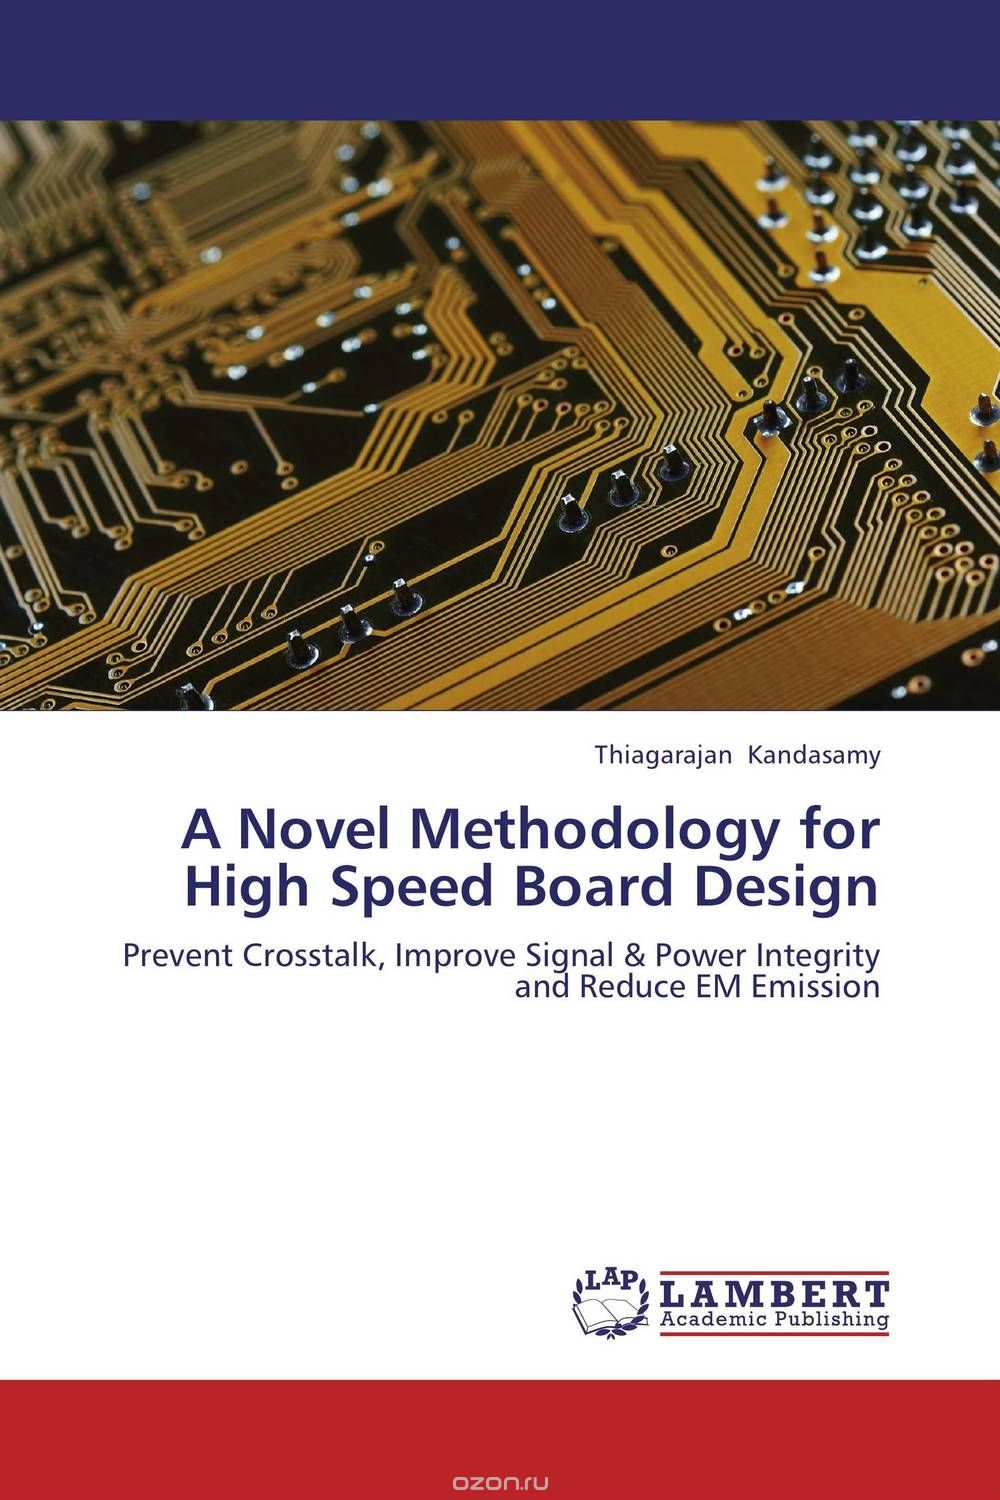 A Novel Methodology for High Speed Board Design